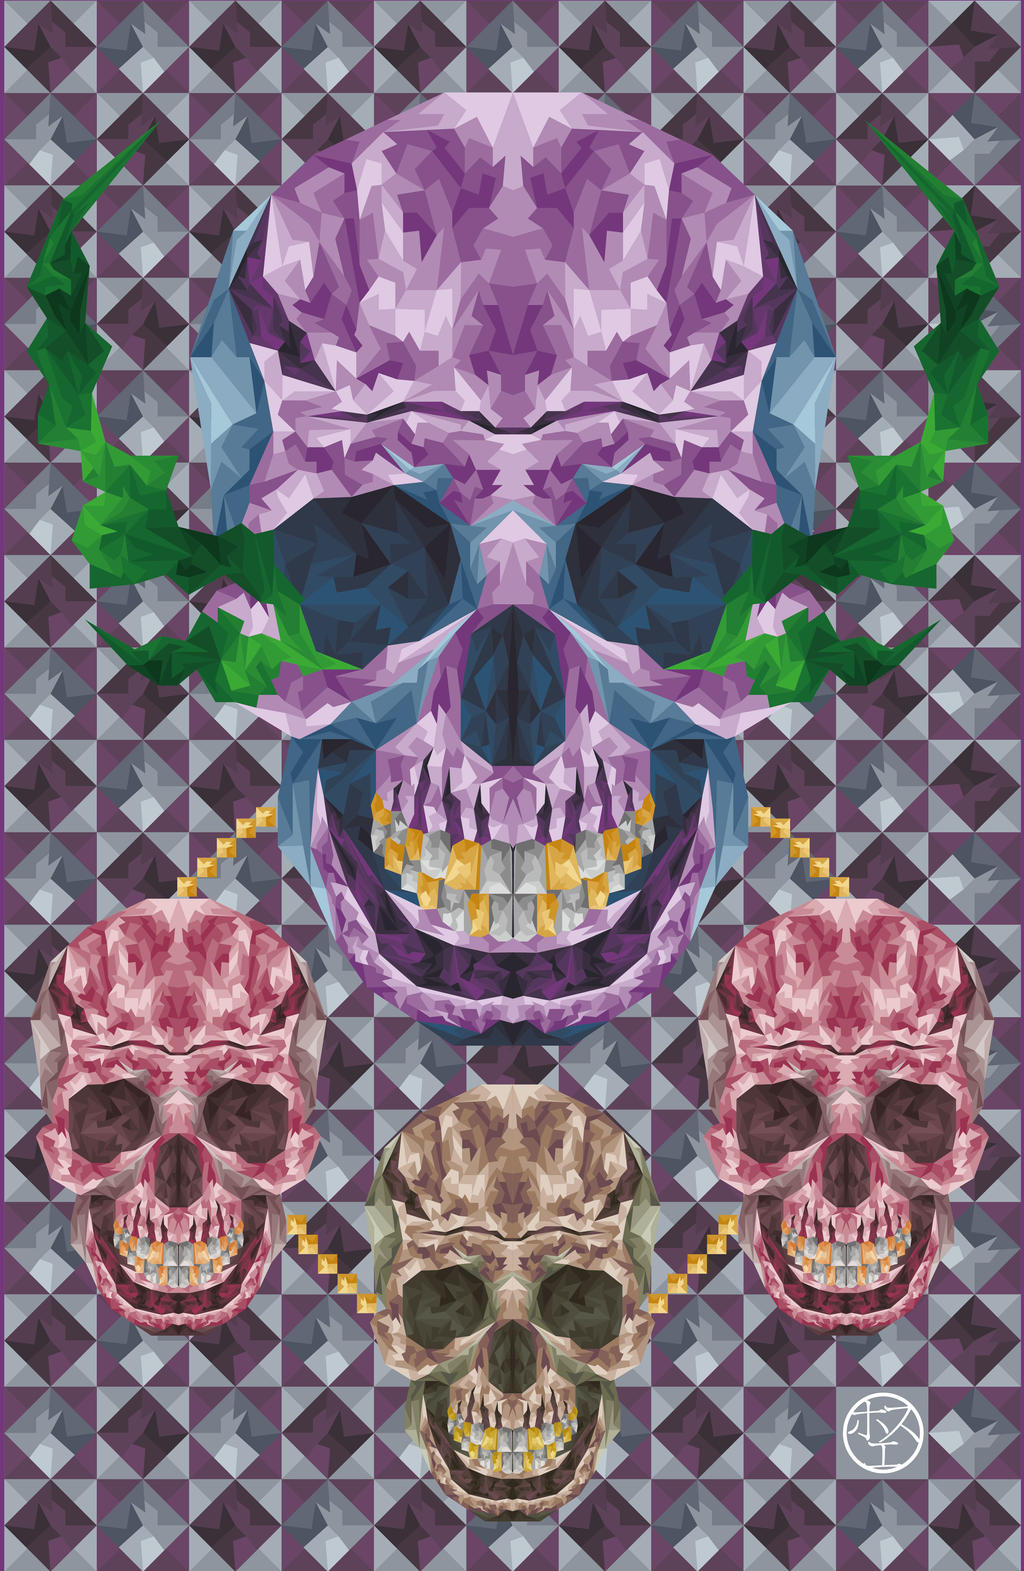 Shaman Skull